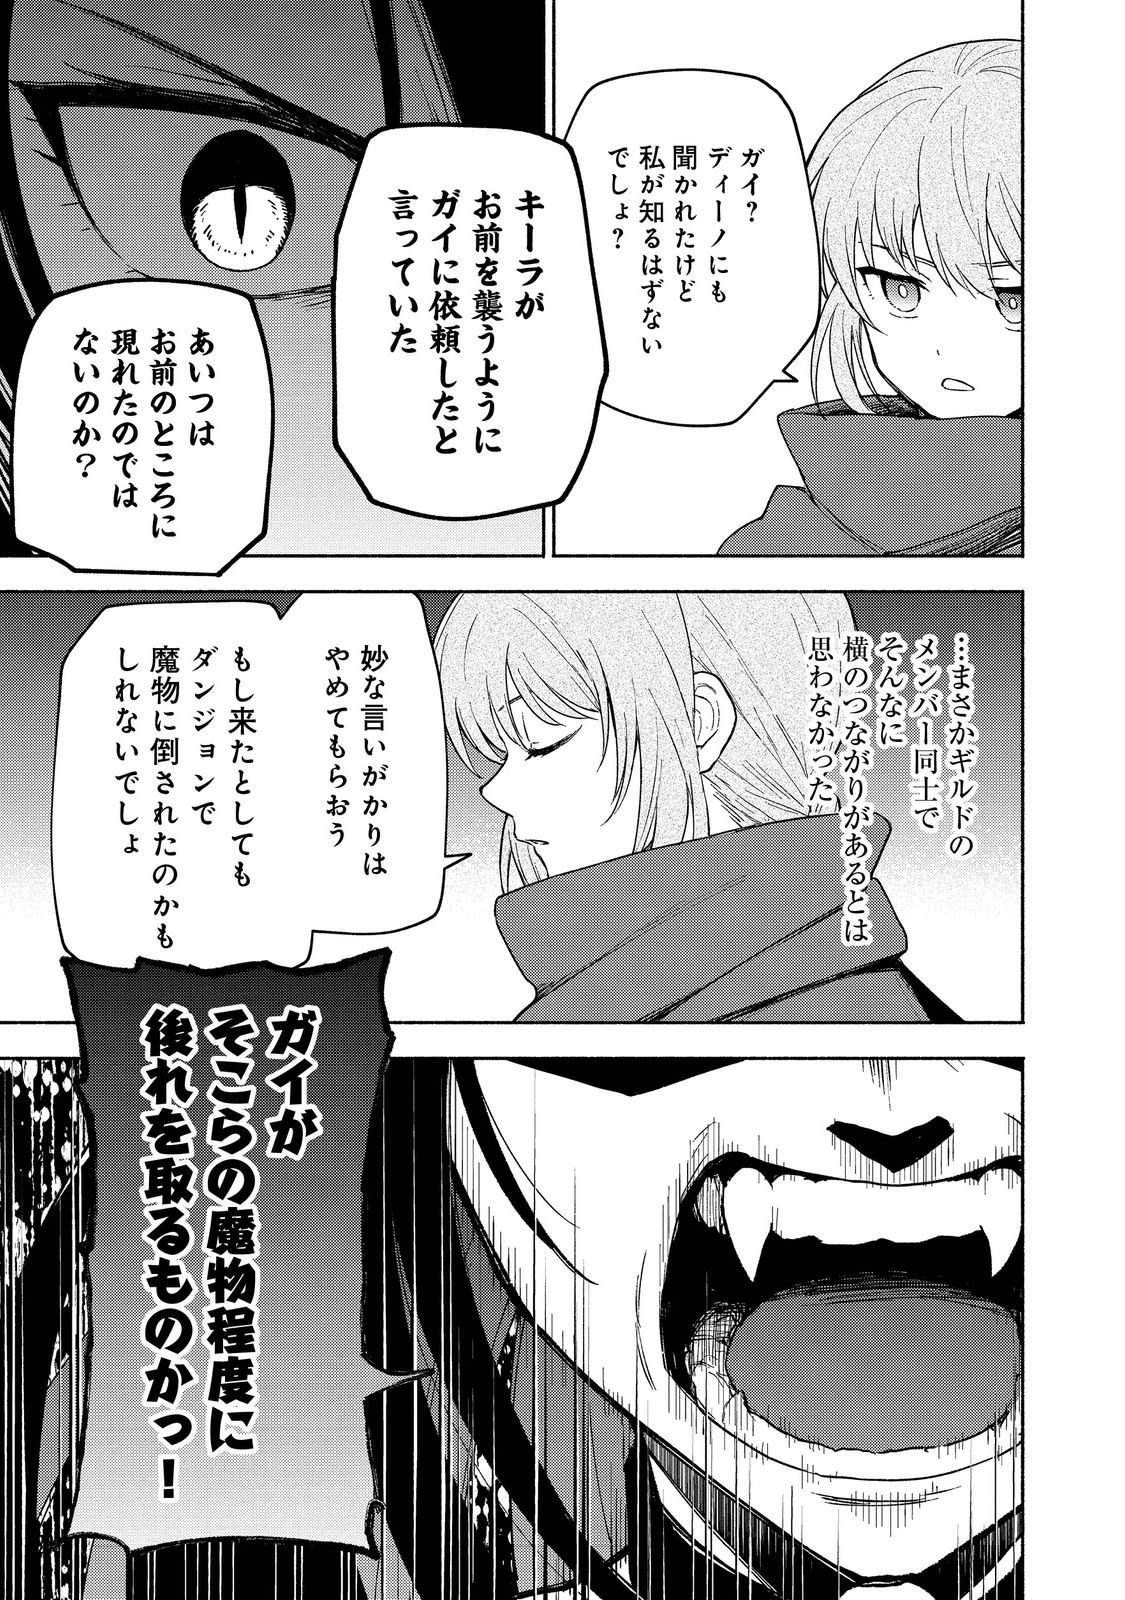 Otome Game no Heroine de Saikyou Survival - Chapter 22 - Page 25